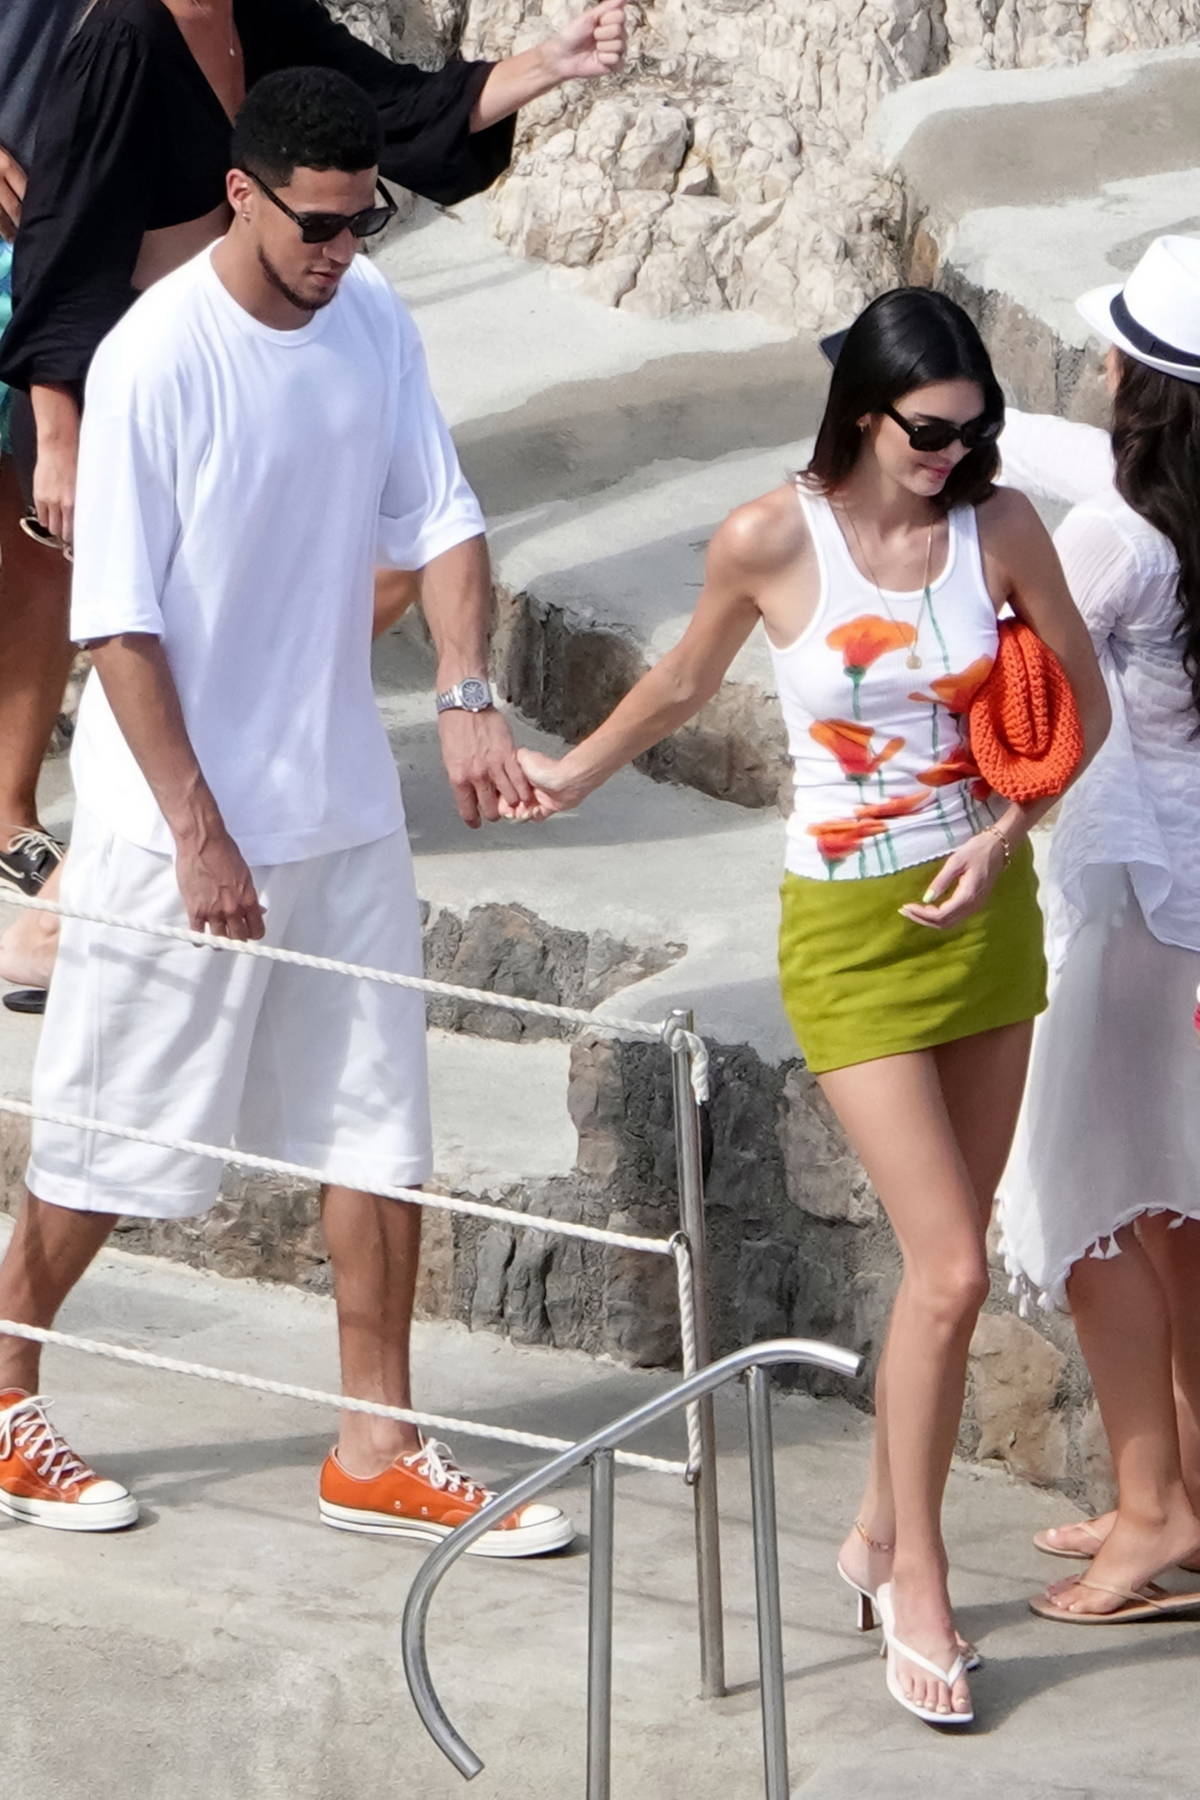 Kendall Jenner: Best Dressed Celebrities This Week – Photos